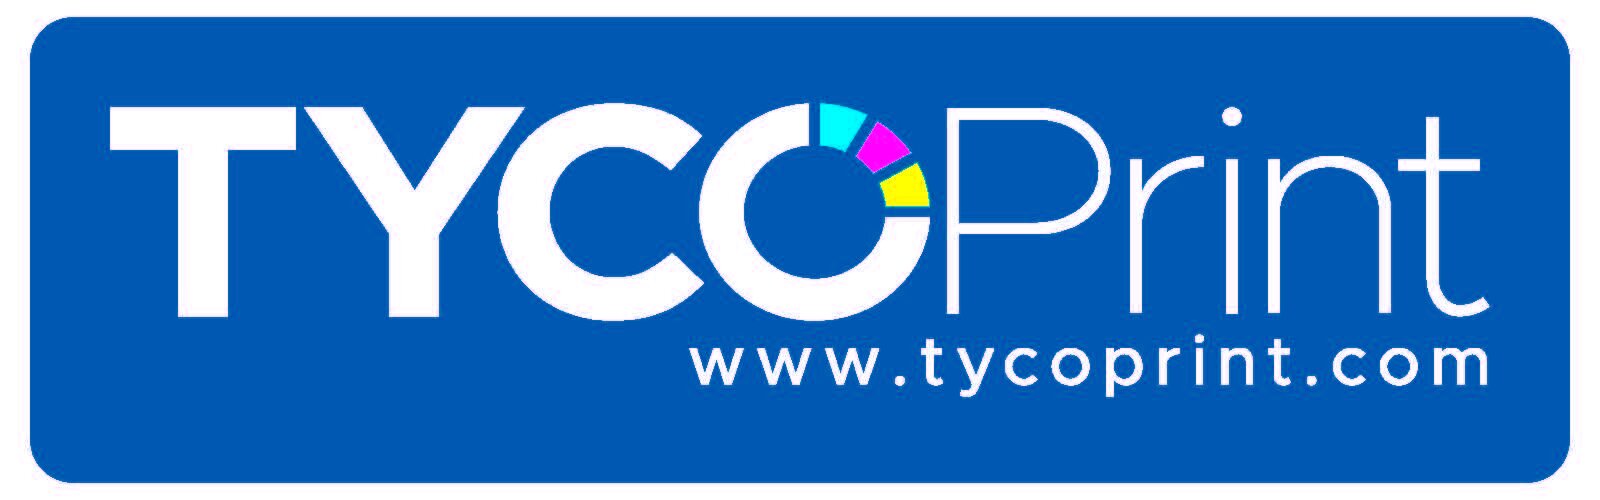 tyco-logo.jpg